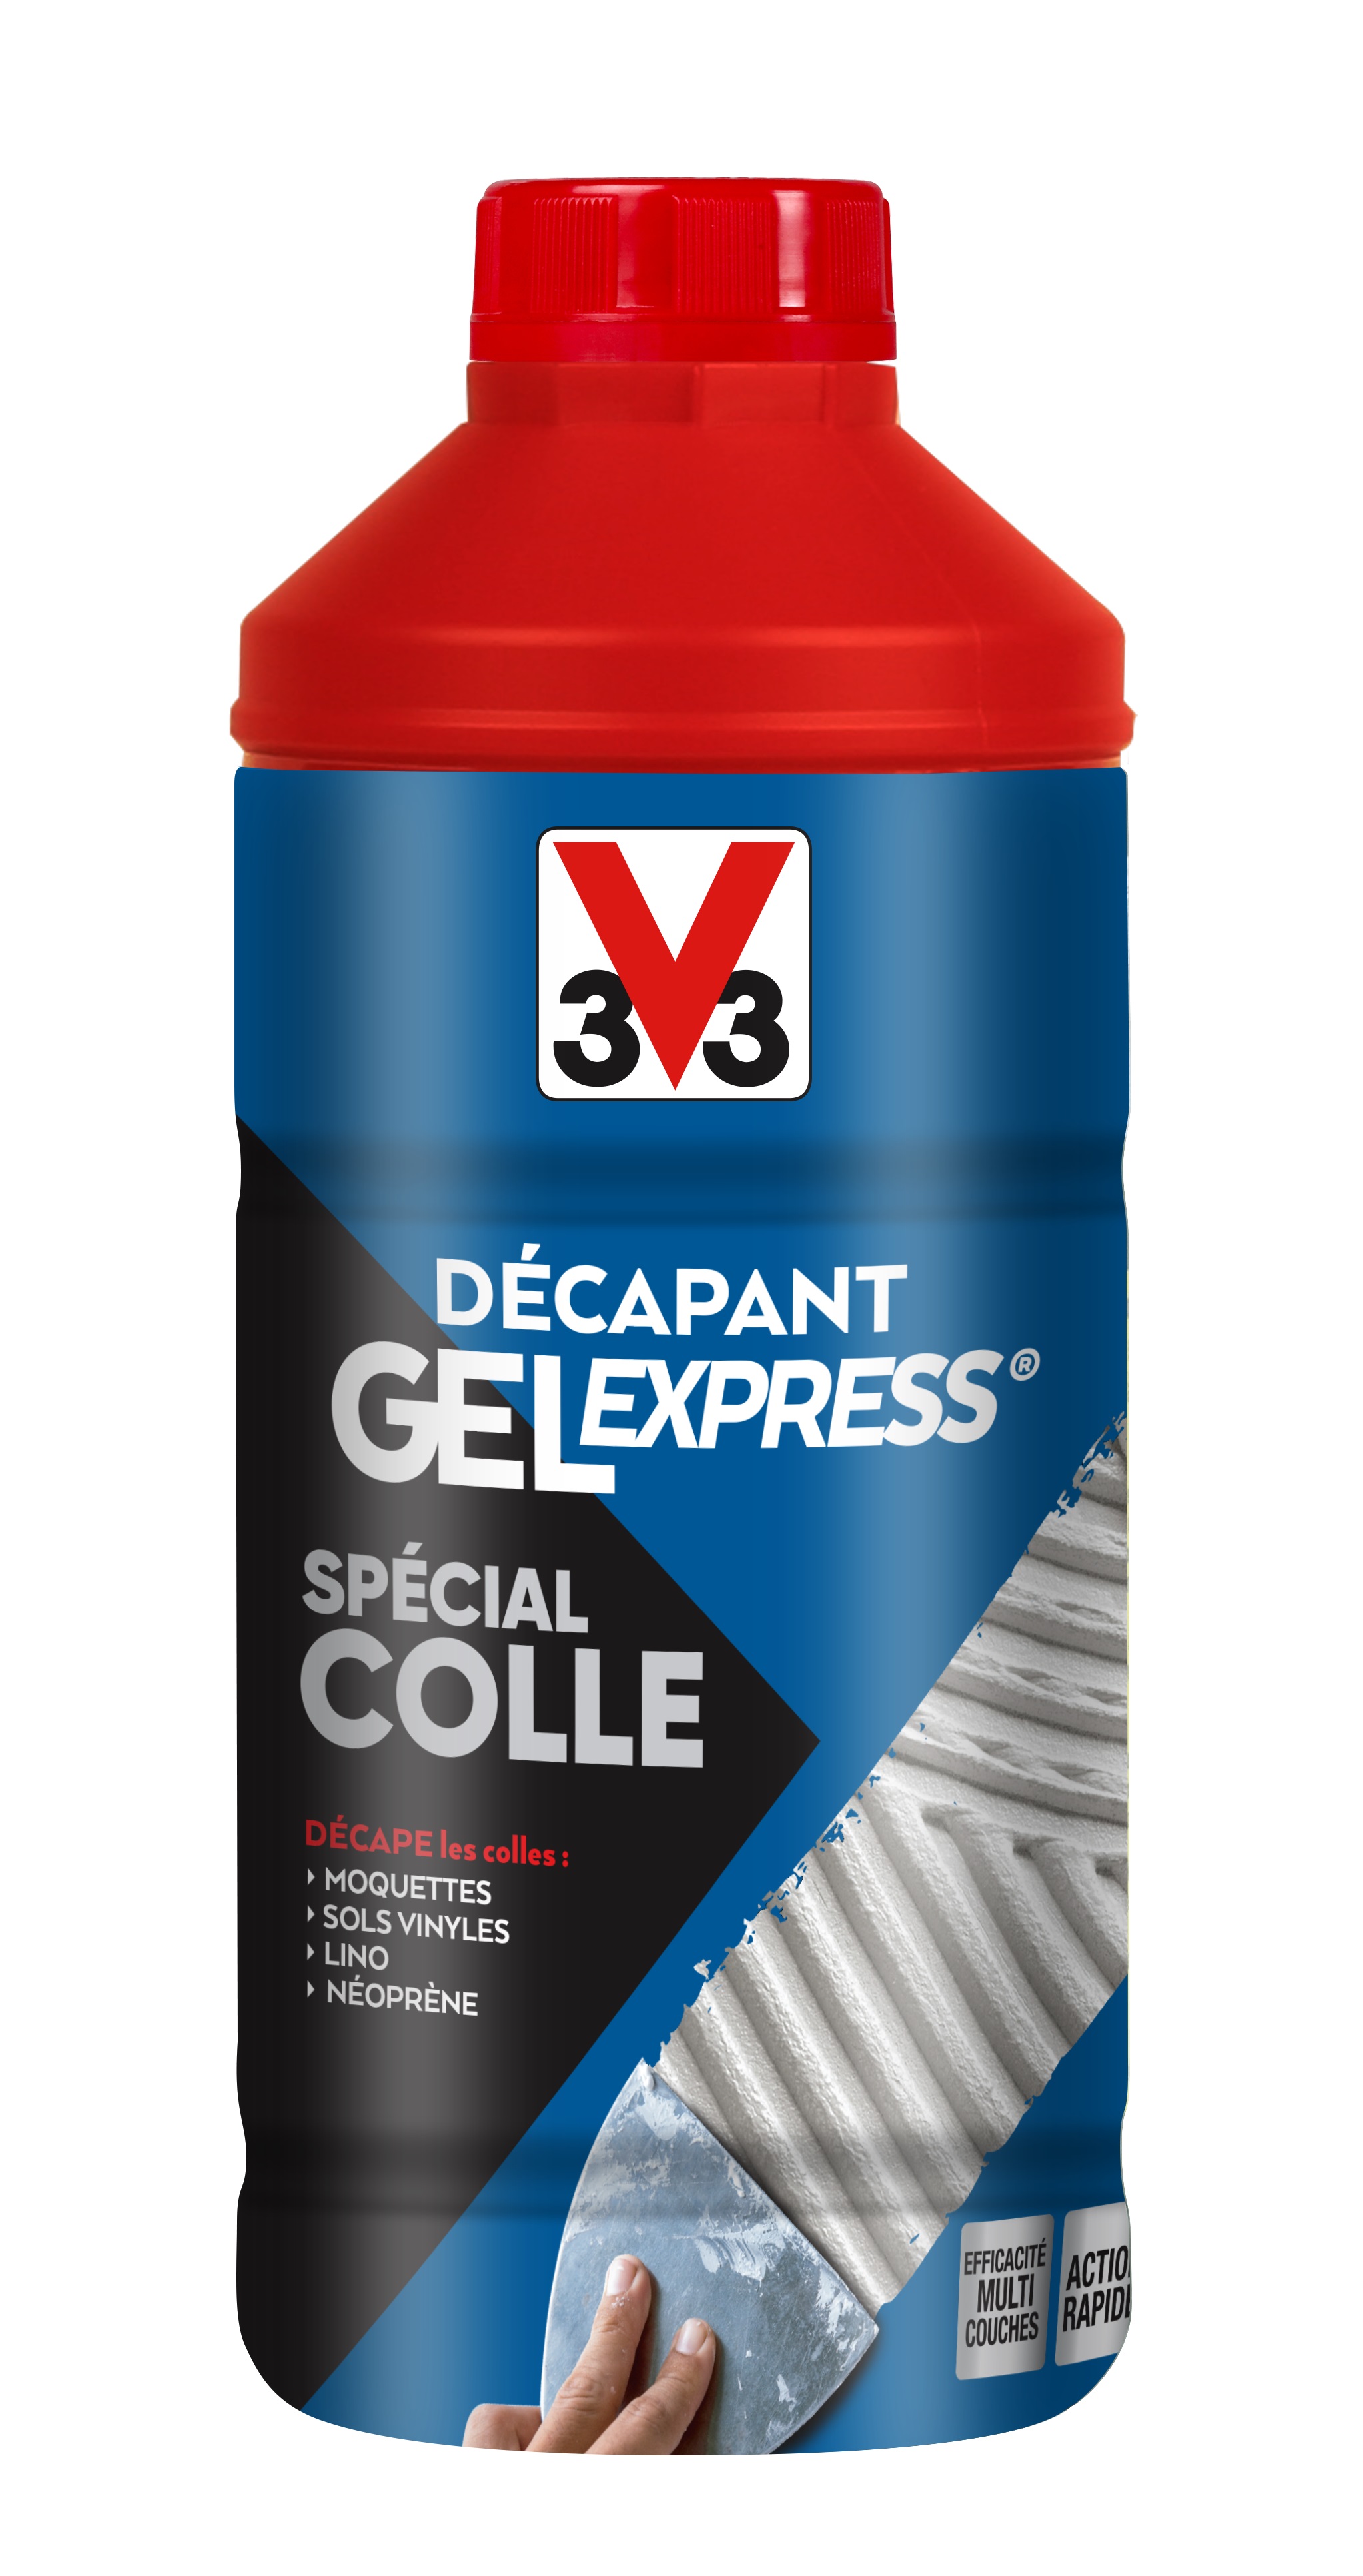 décapant gel express spécial colle 1l - V33